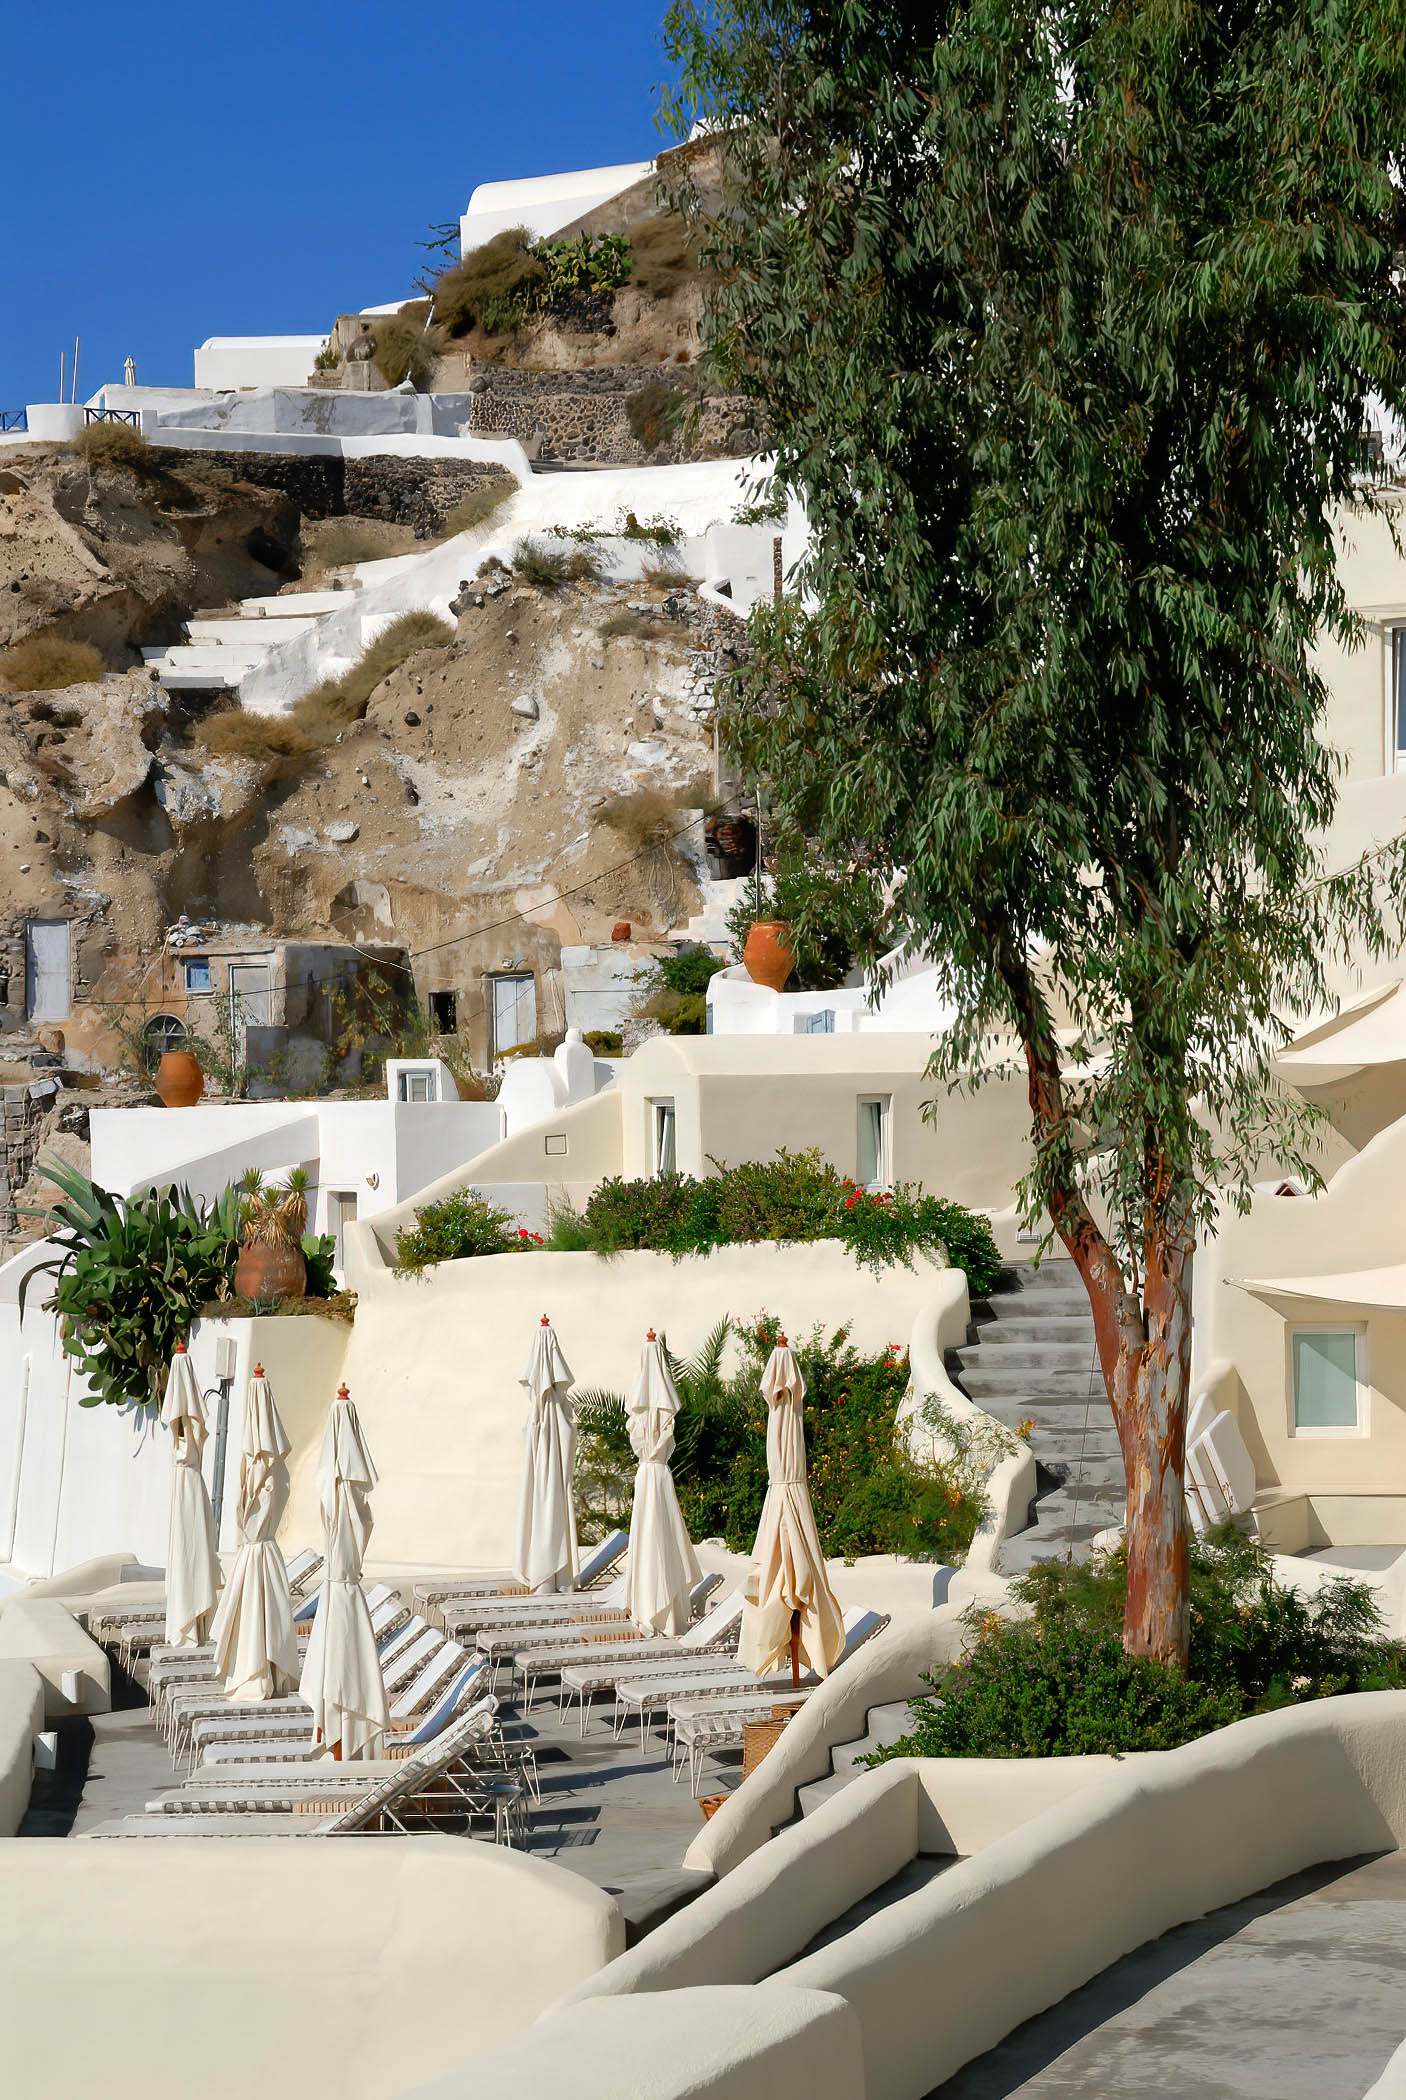 Mystique Hotel Santorini – Oia, Santorini Island, Greece – Clifftop Pool Deck